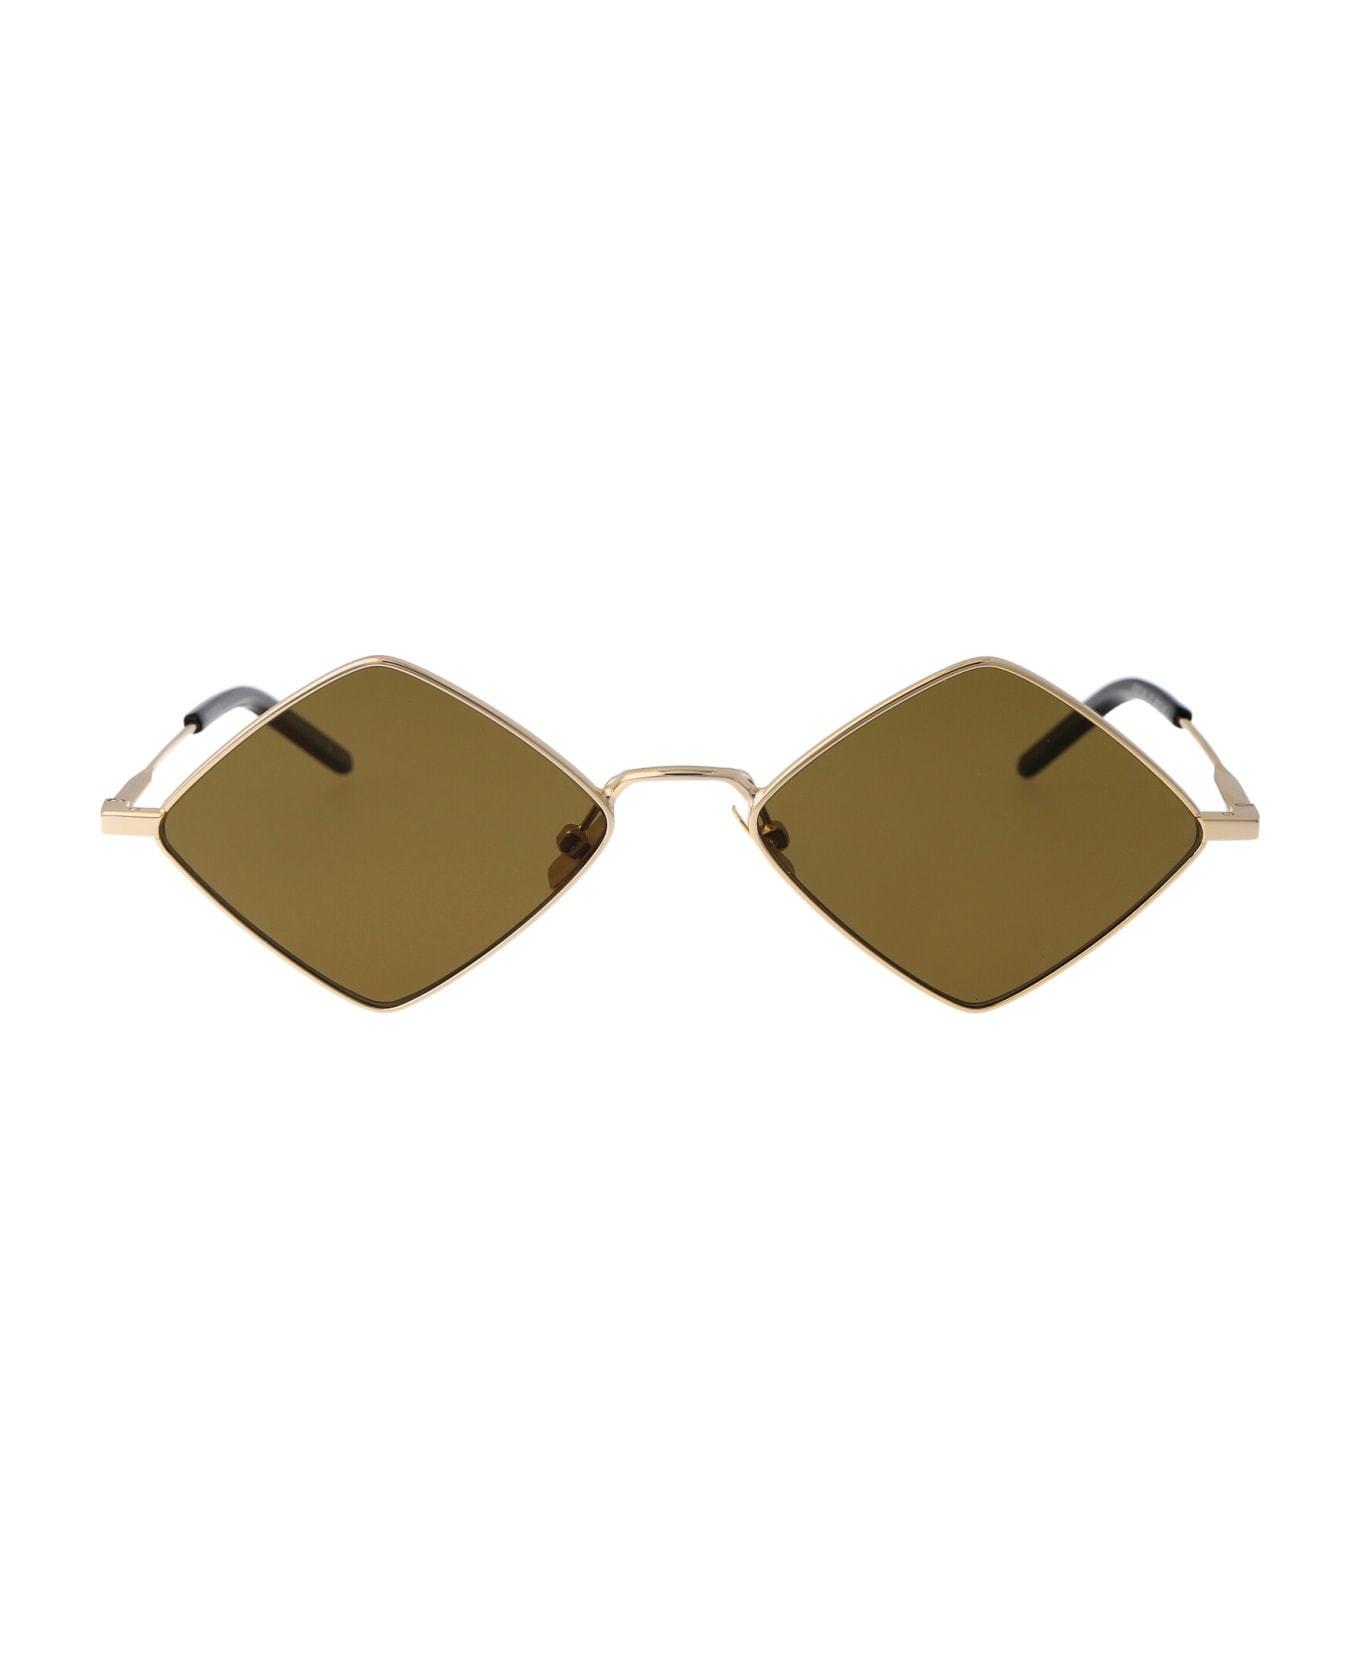 Saint Laurent Eyewear Sl 302 Lisa Sunglasses - 011 GOLD GOLD BROWN